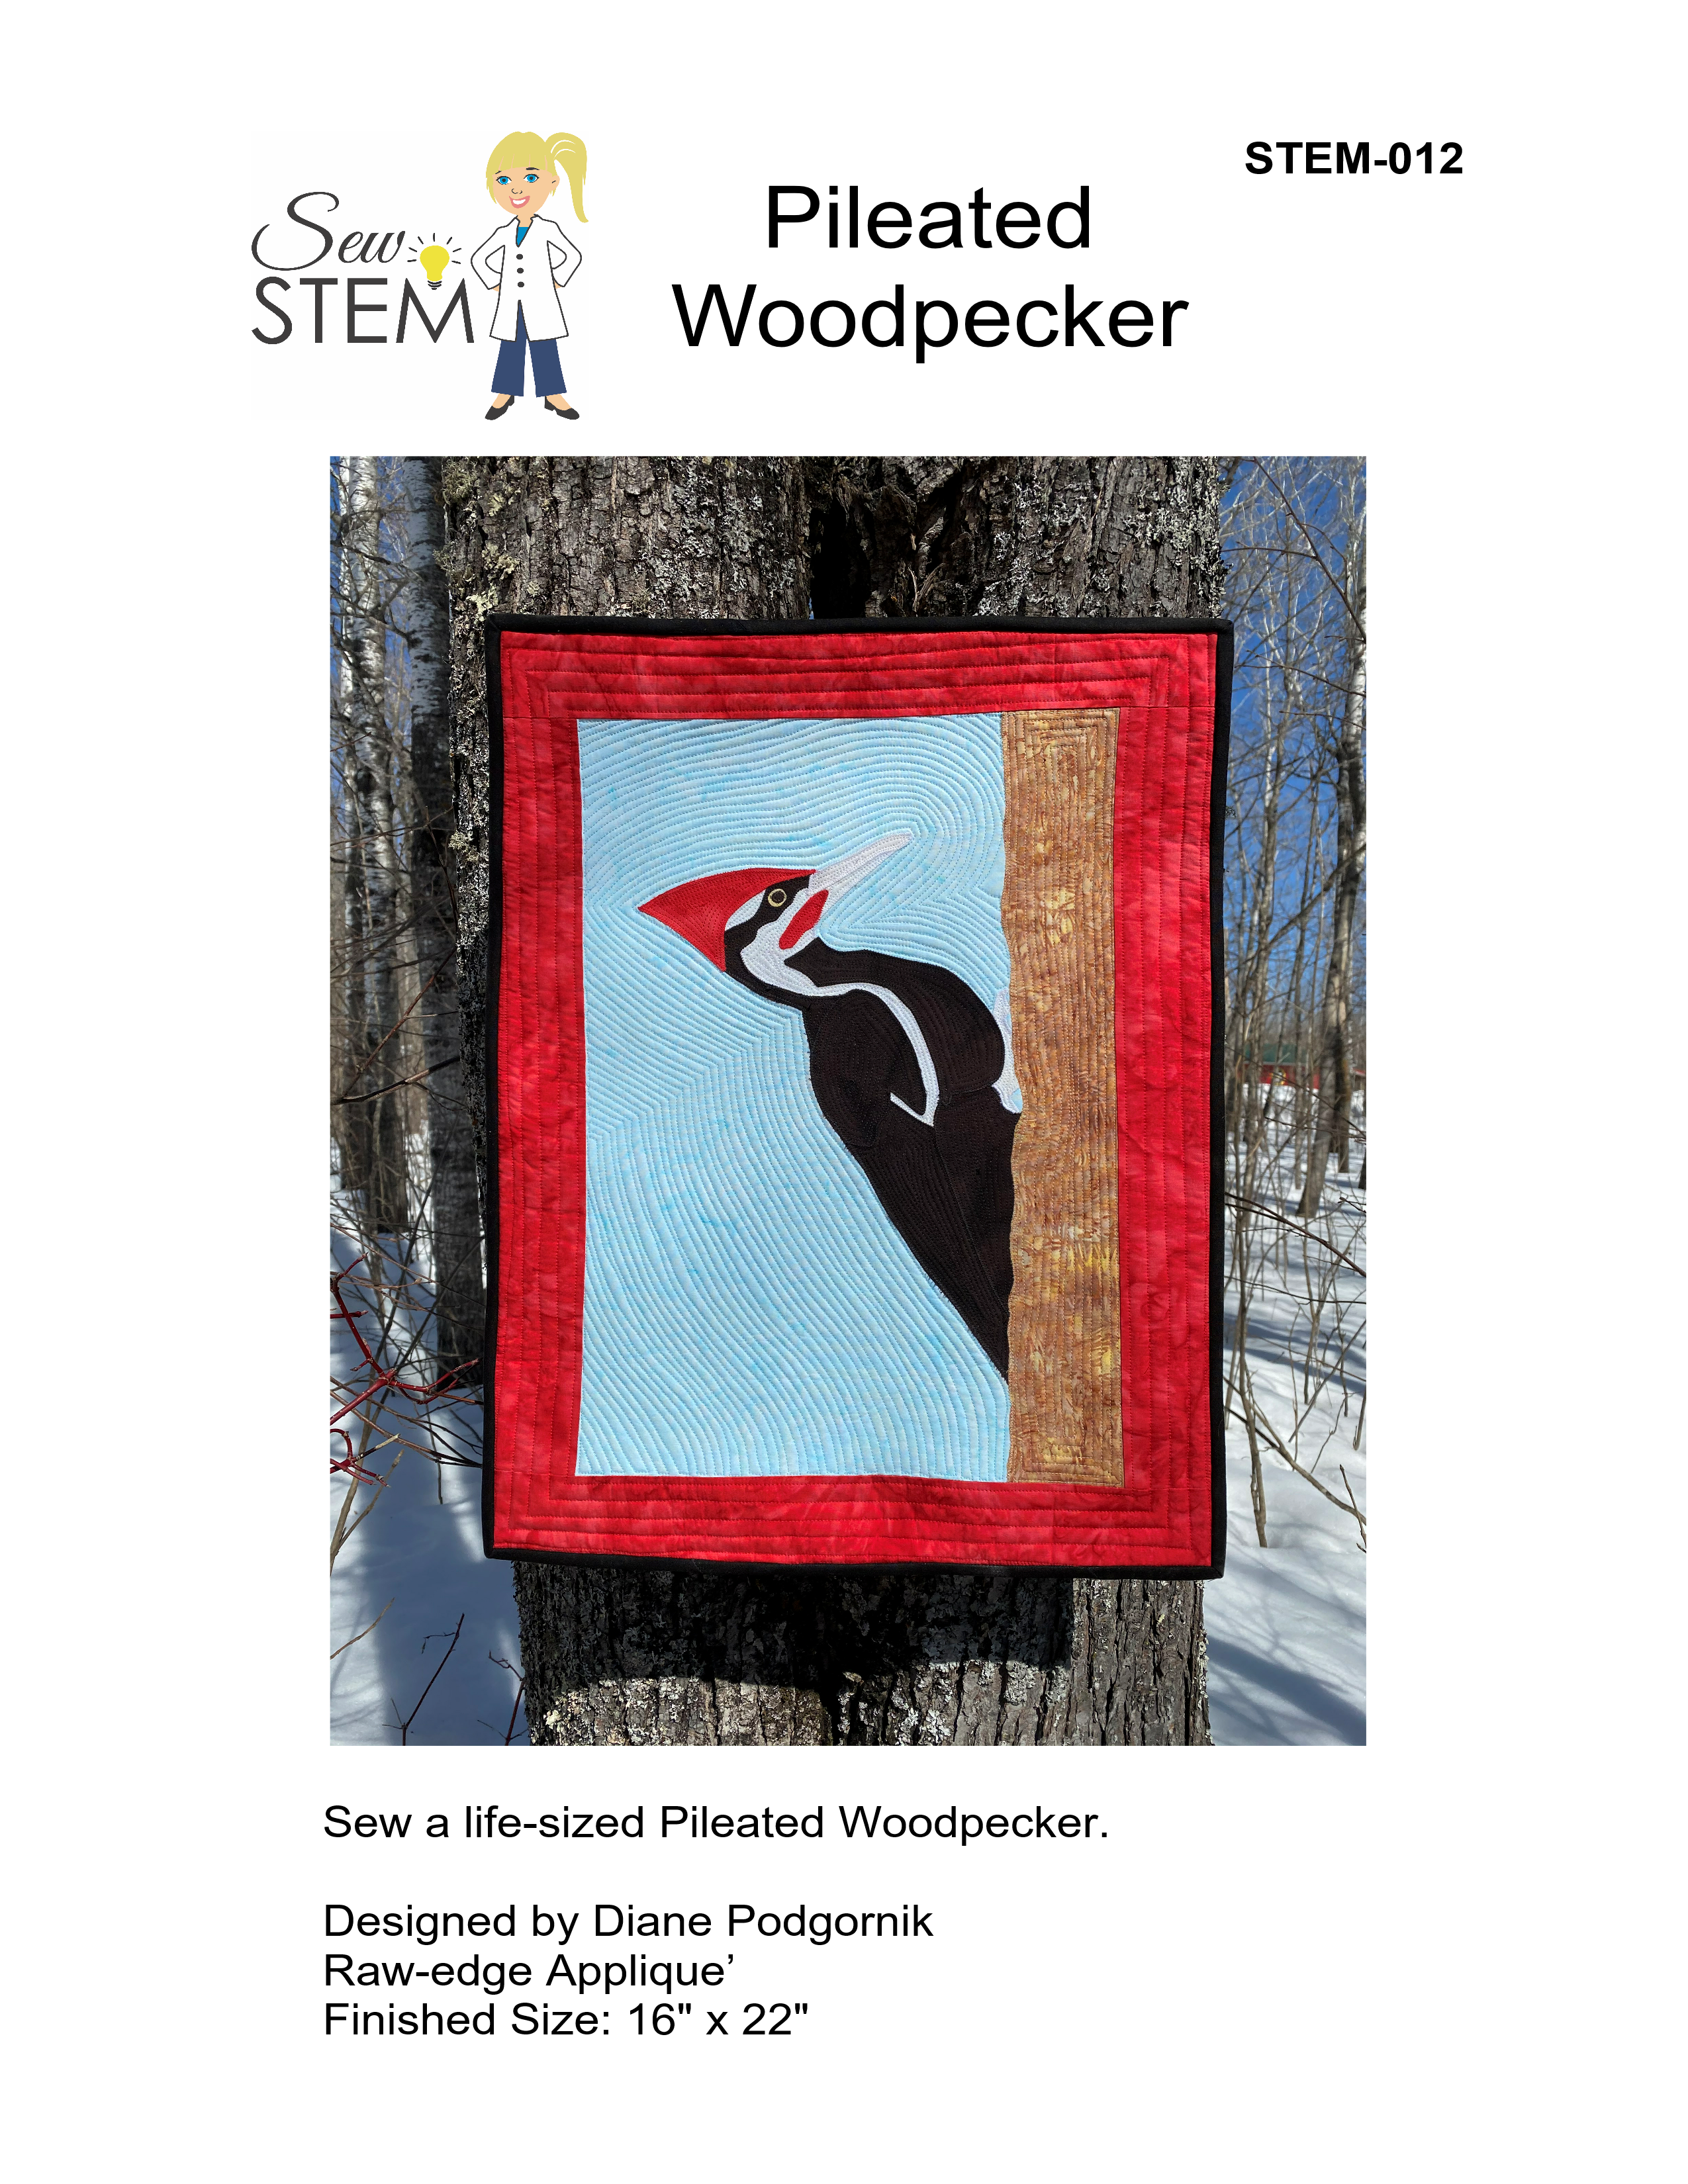 Pileated Woodpecker
STEM-012